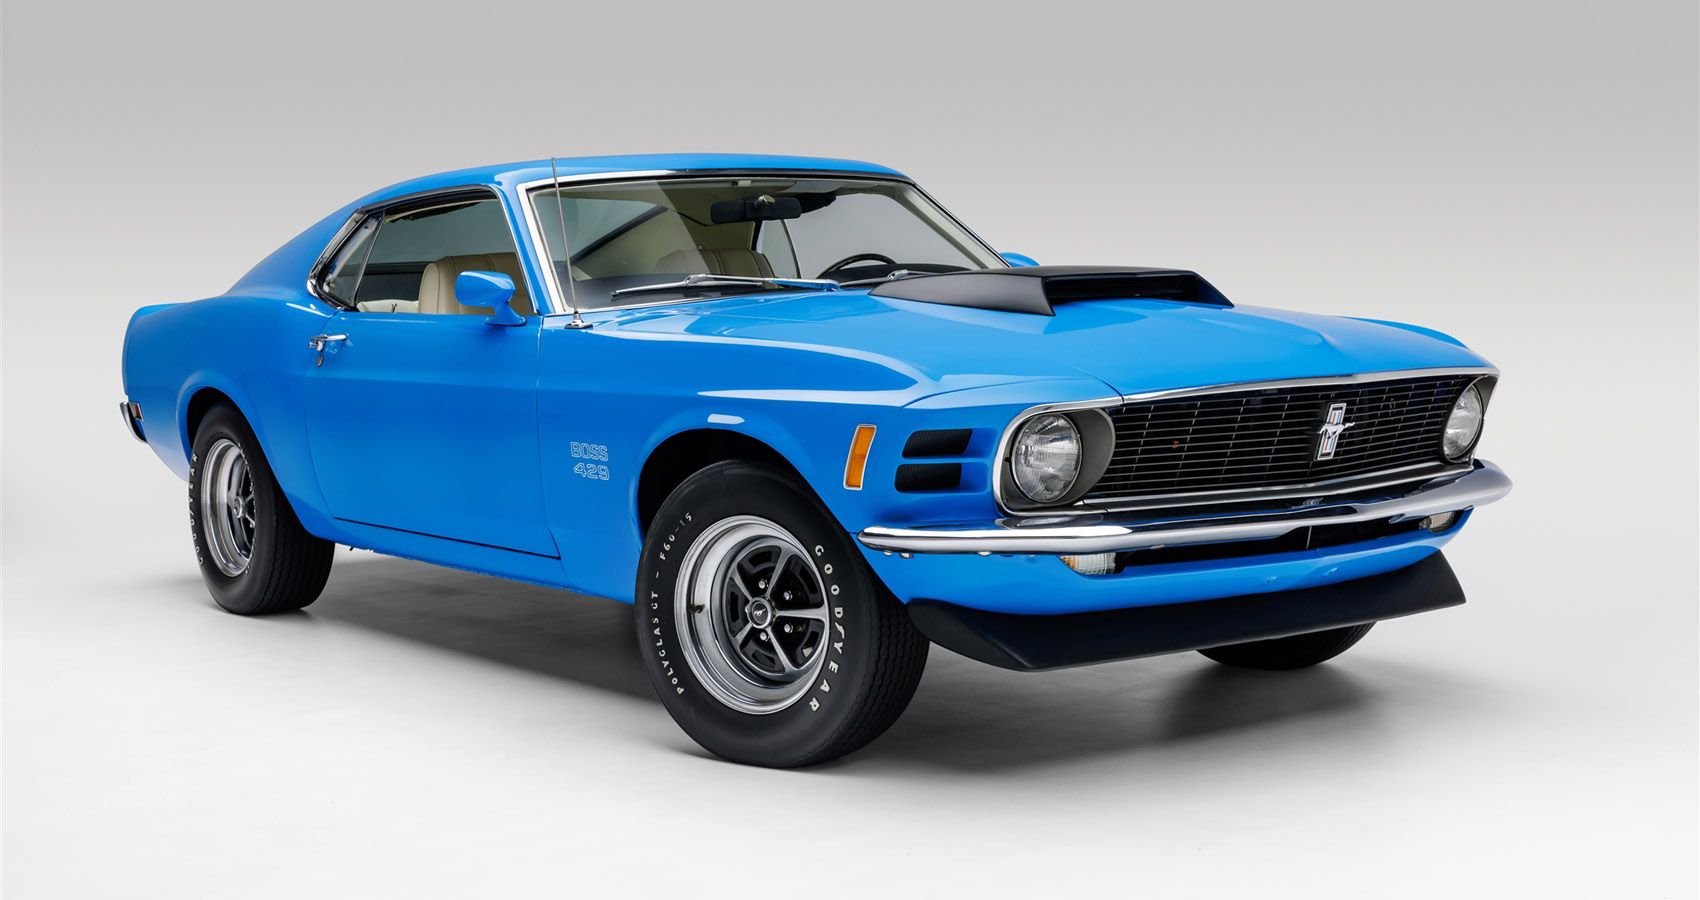 1970 Ford Mustang Boss 429 In Grabber Blue Is Up On Barrett-Jackson